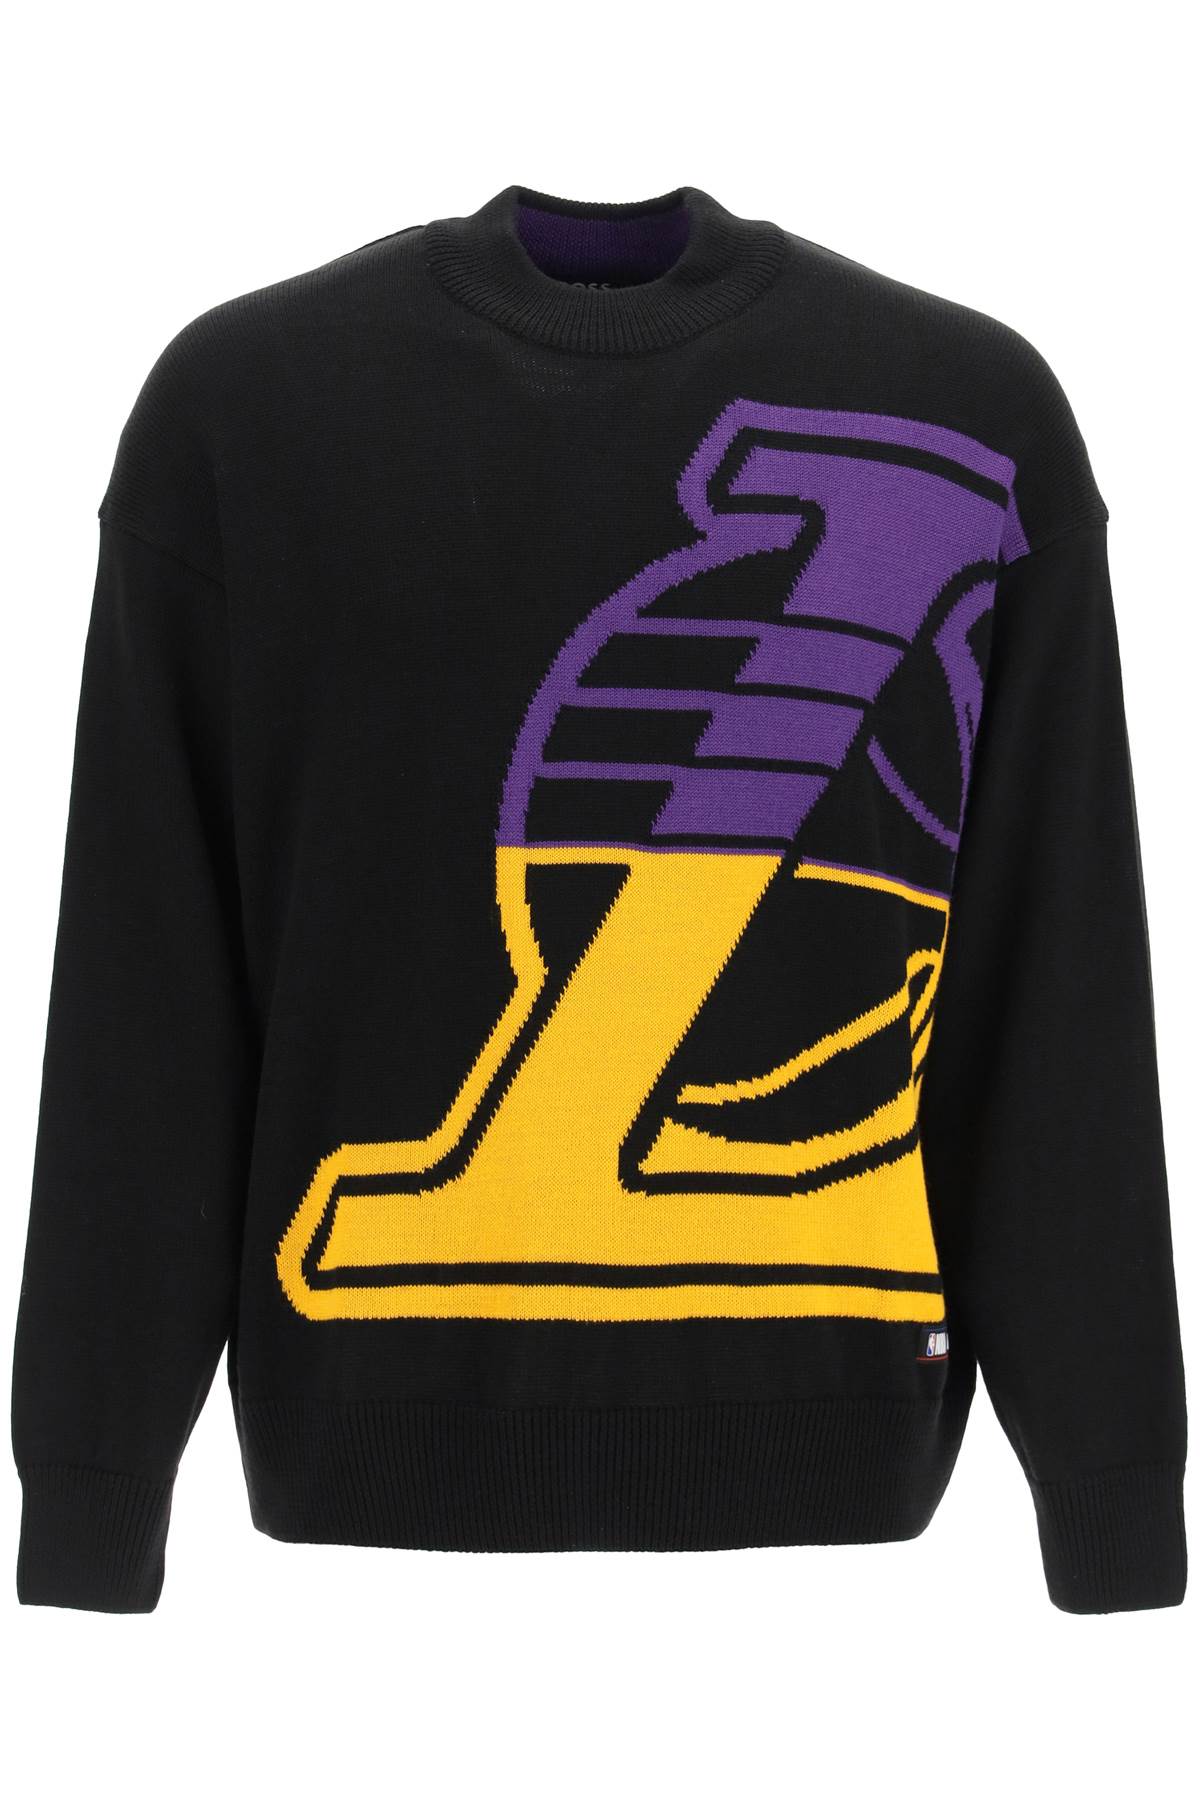 Hugo Boss Los Angeles Lakers Sweater X Nba